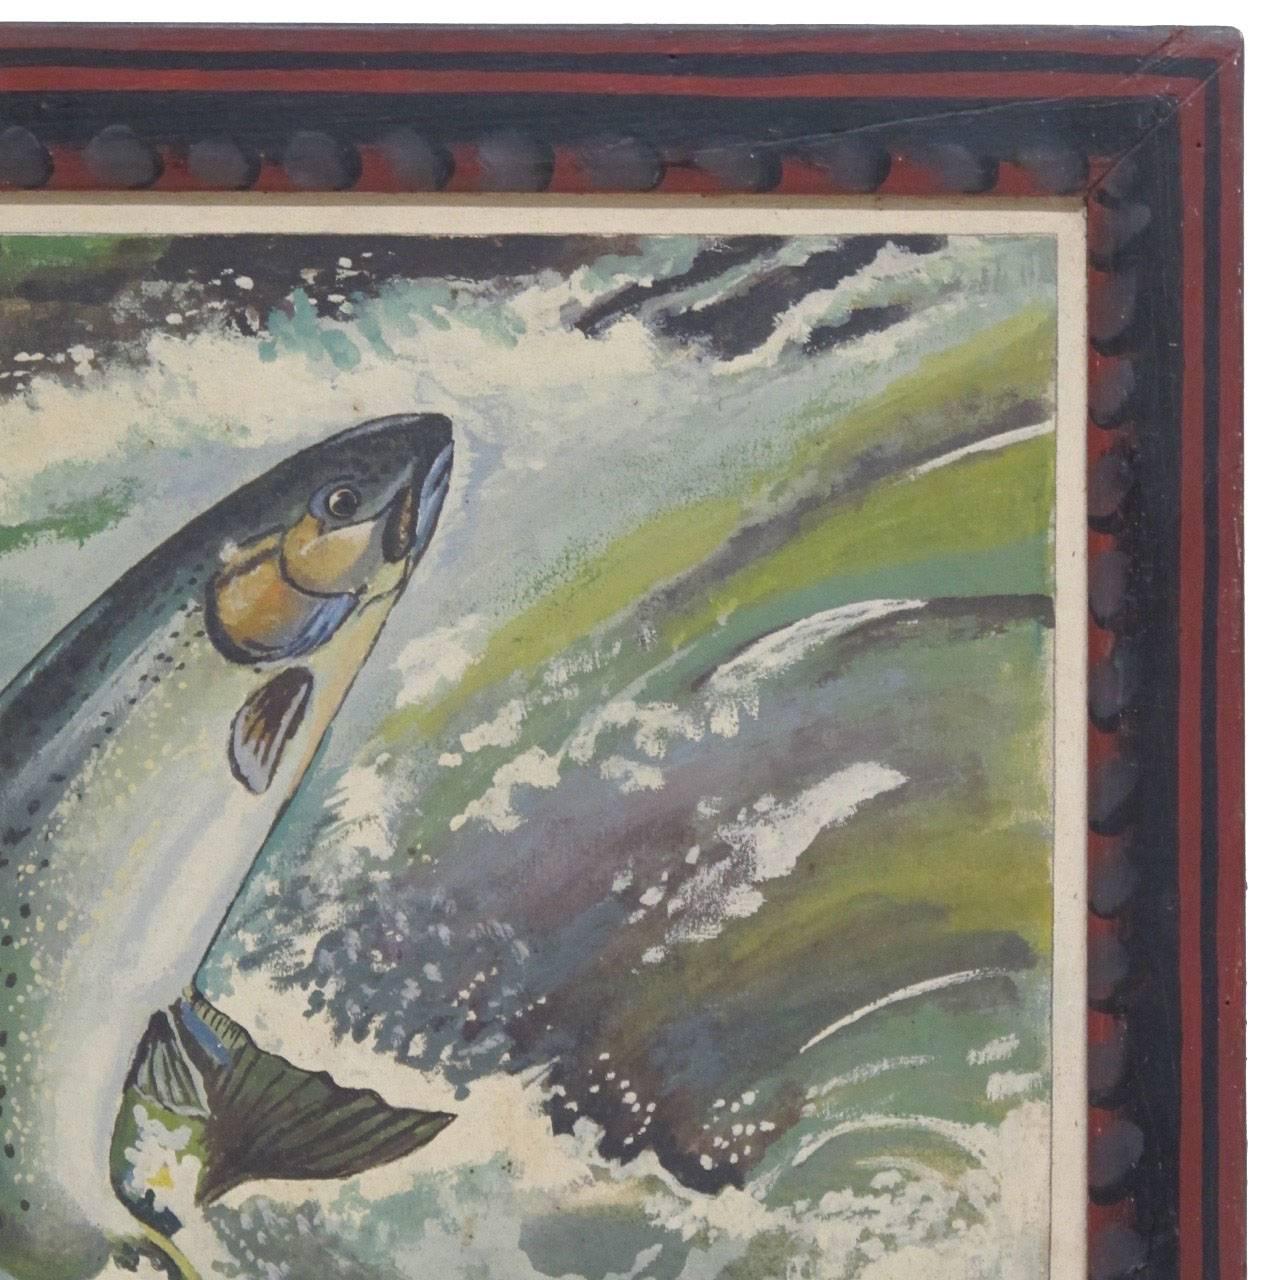 Hand-Painted American Folk Art Fish Painting